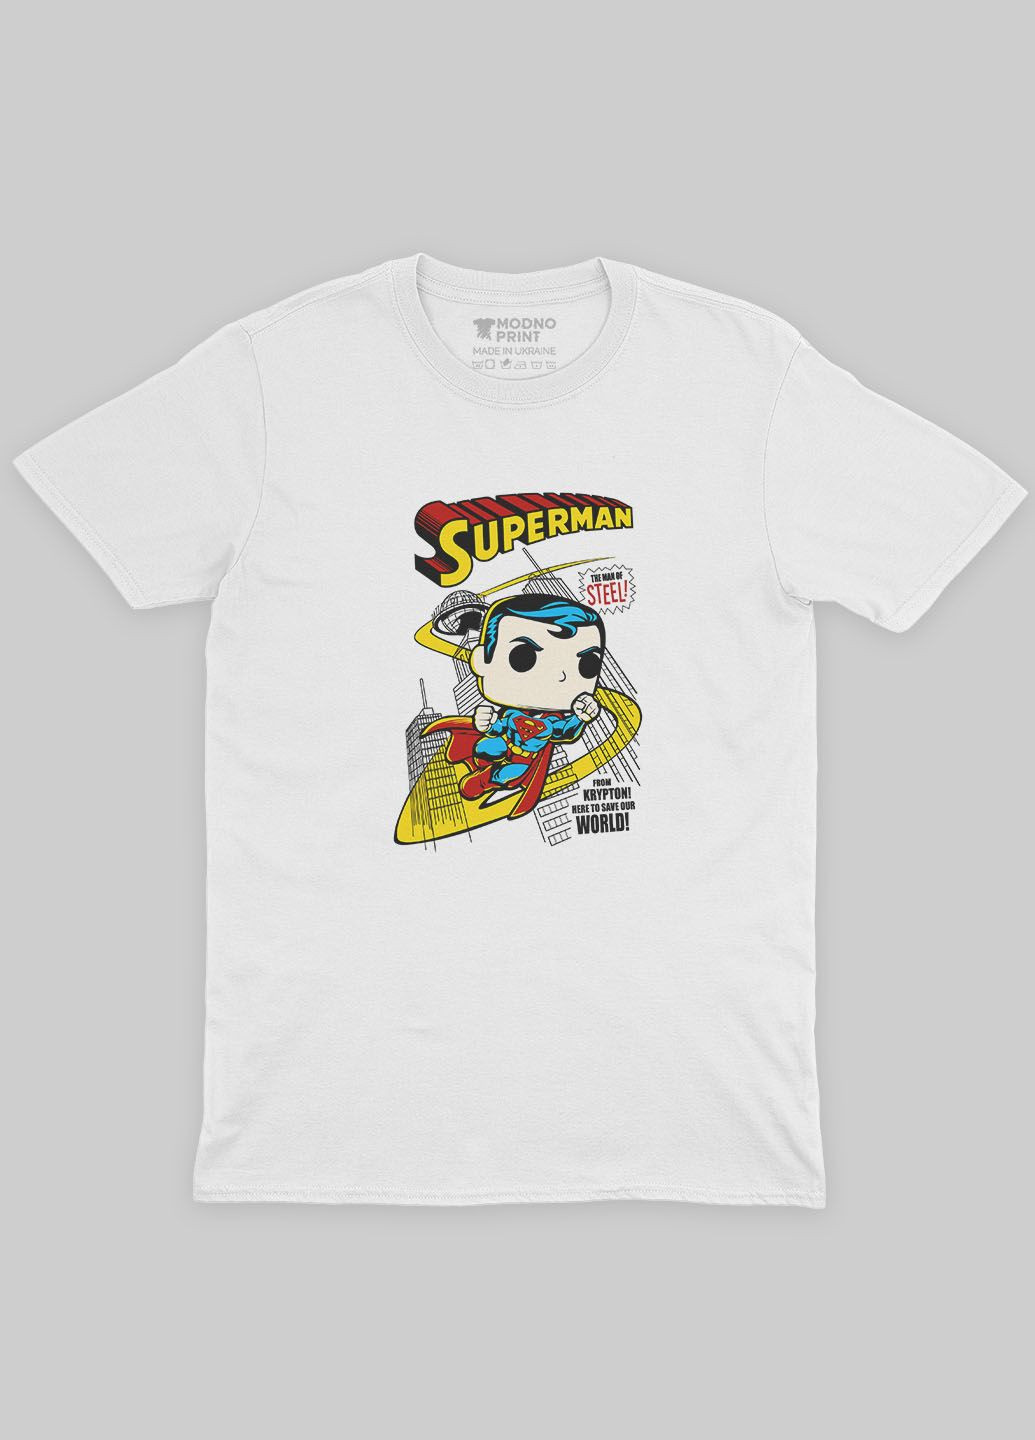 Мужская футболка с принтом супергероя - Супермен (TS001-1-WHI-006-009-003-F) Modno - (292119050)